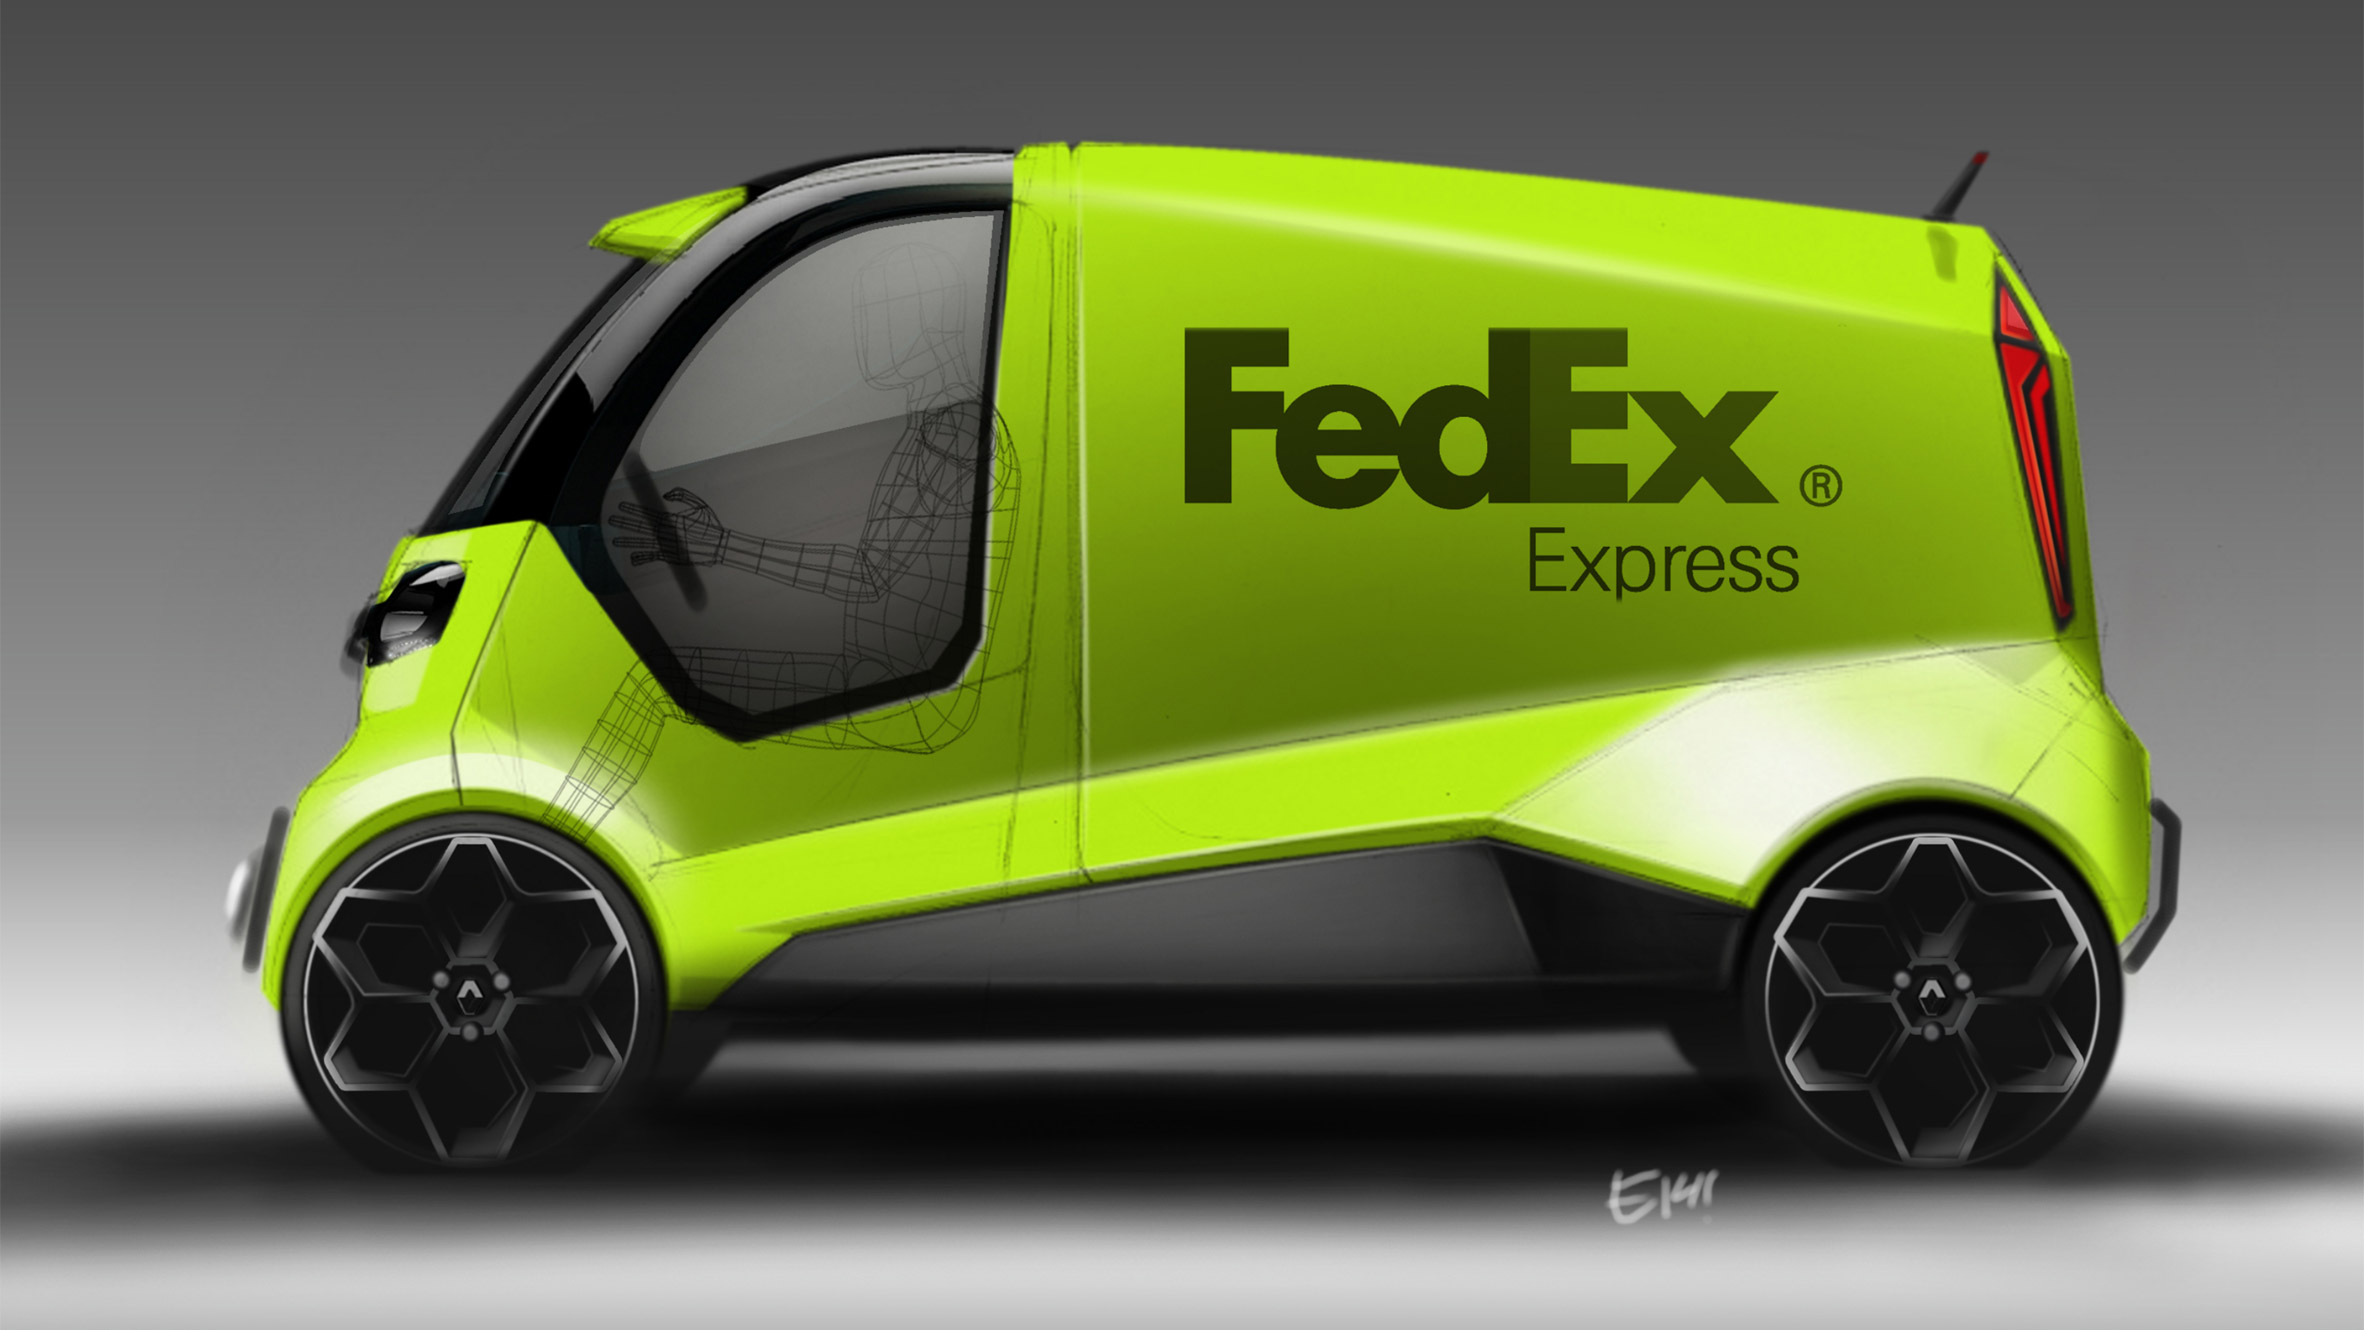 A green FedEx Express van against a grey background